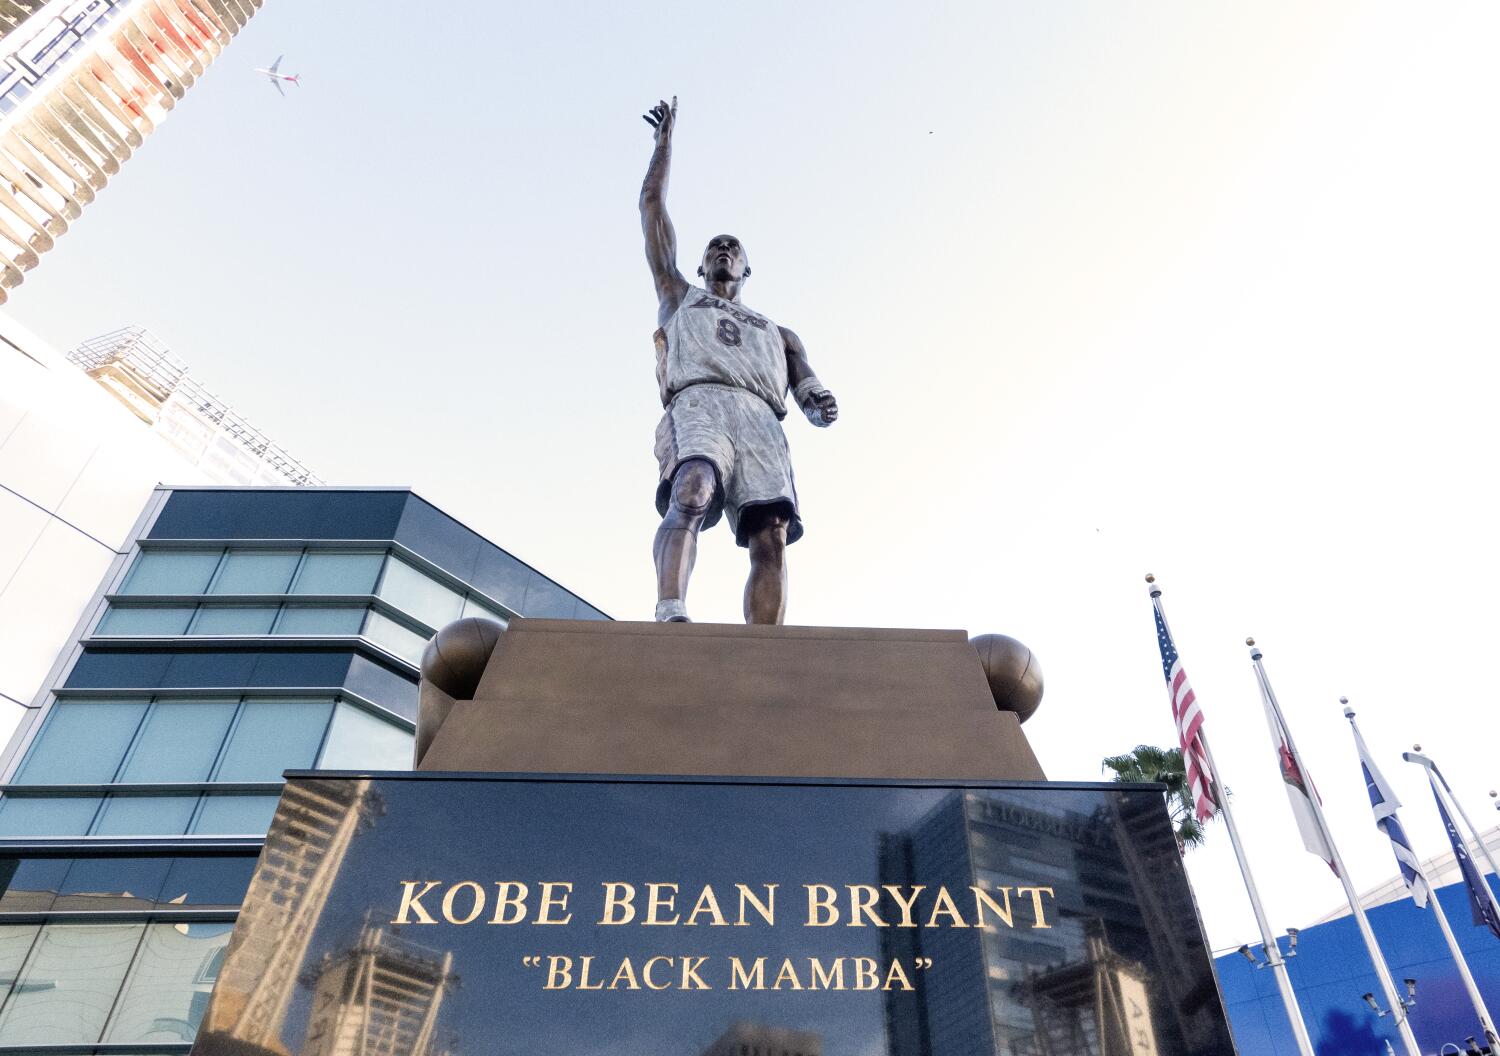 Pleasing English teachers everywhere, pesky typos on Kobe Bryant statue are corrected